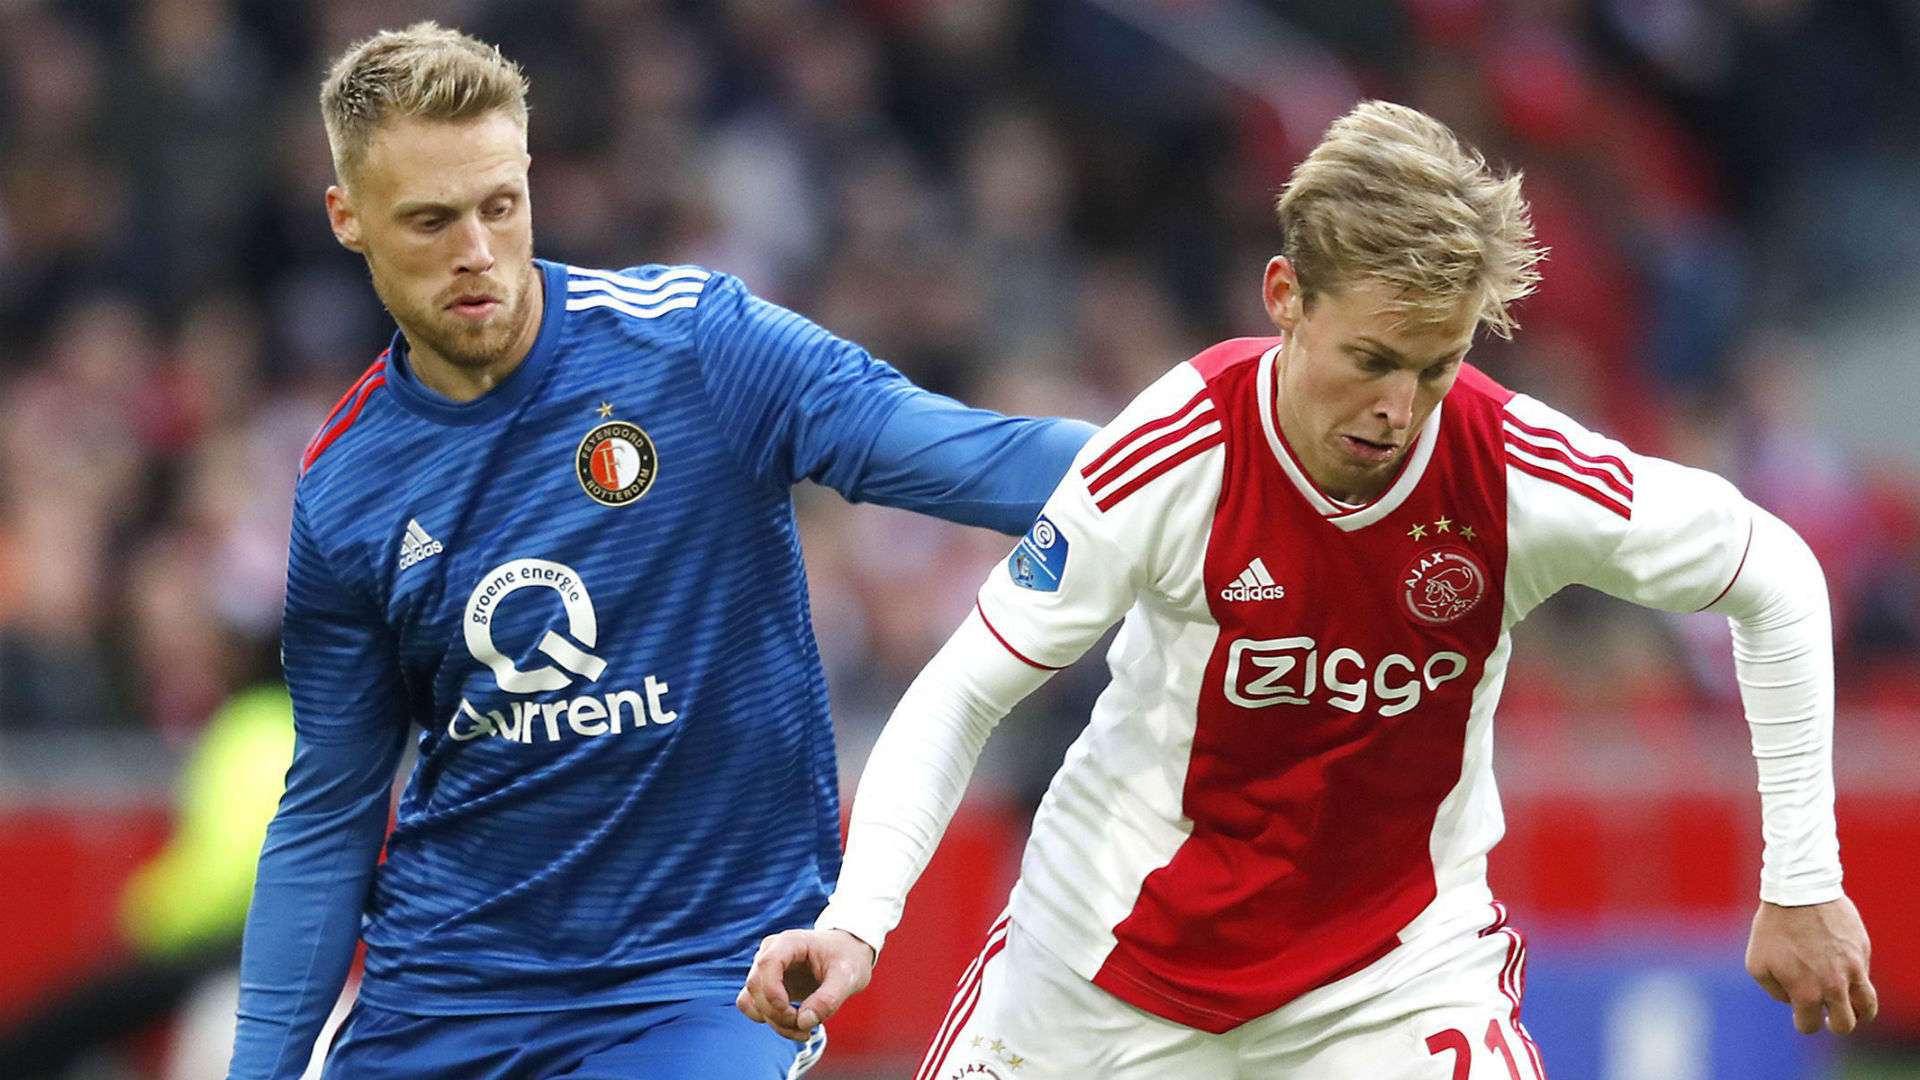 Nicolai Jorgensen Feyenoord Frenkie de Jong Ajax 2018